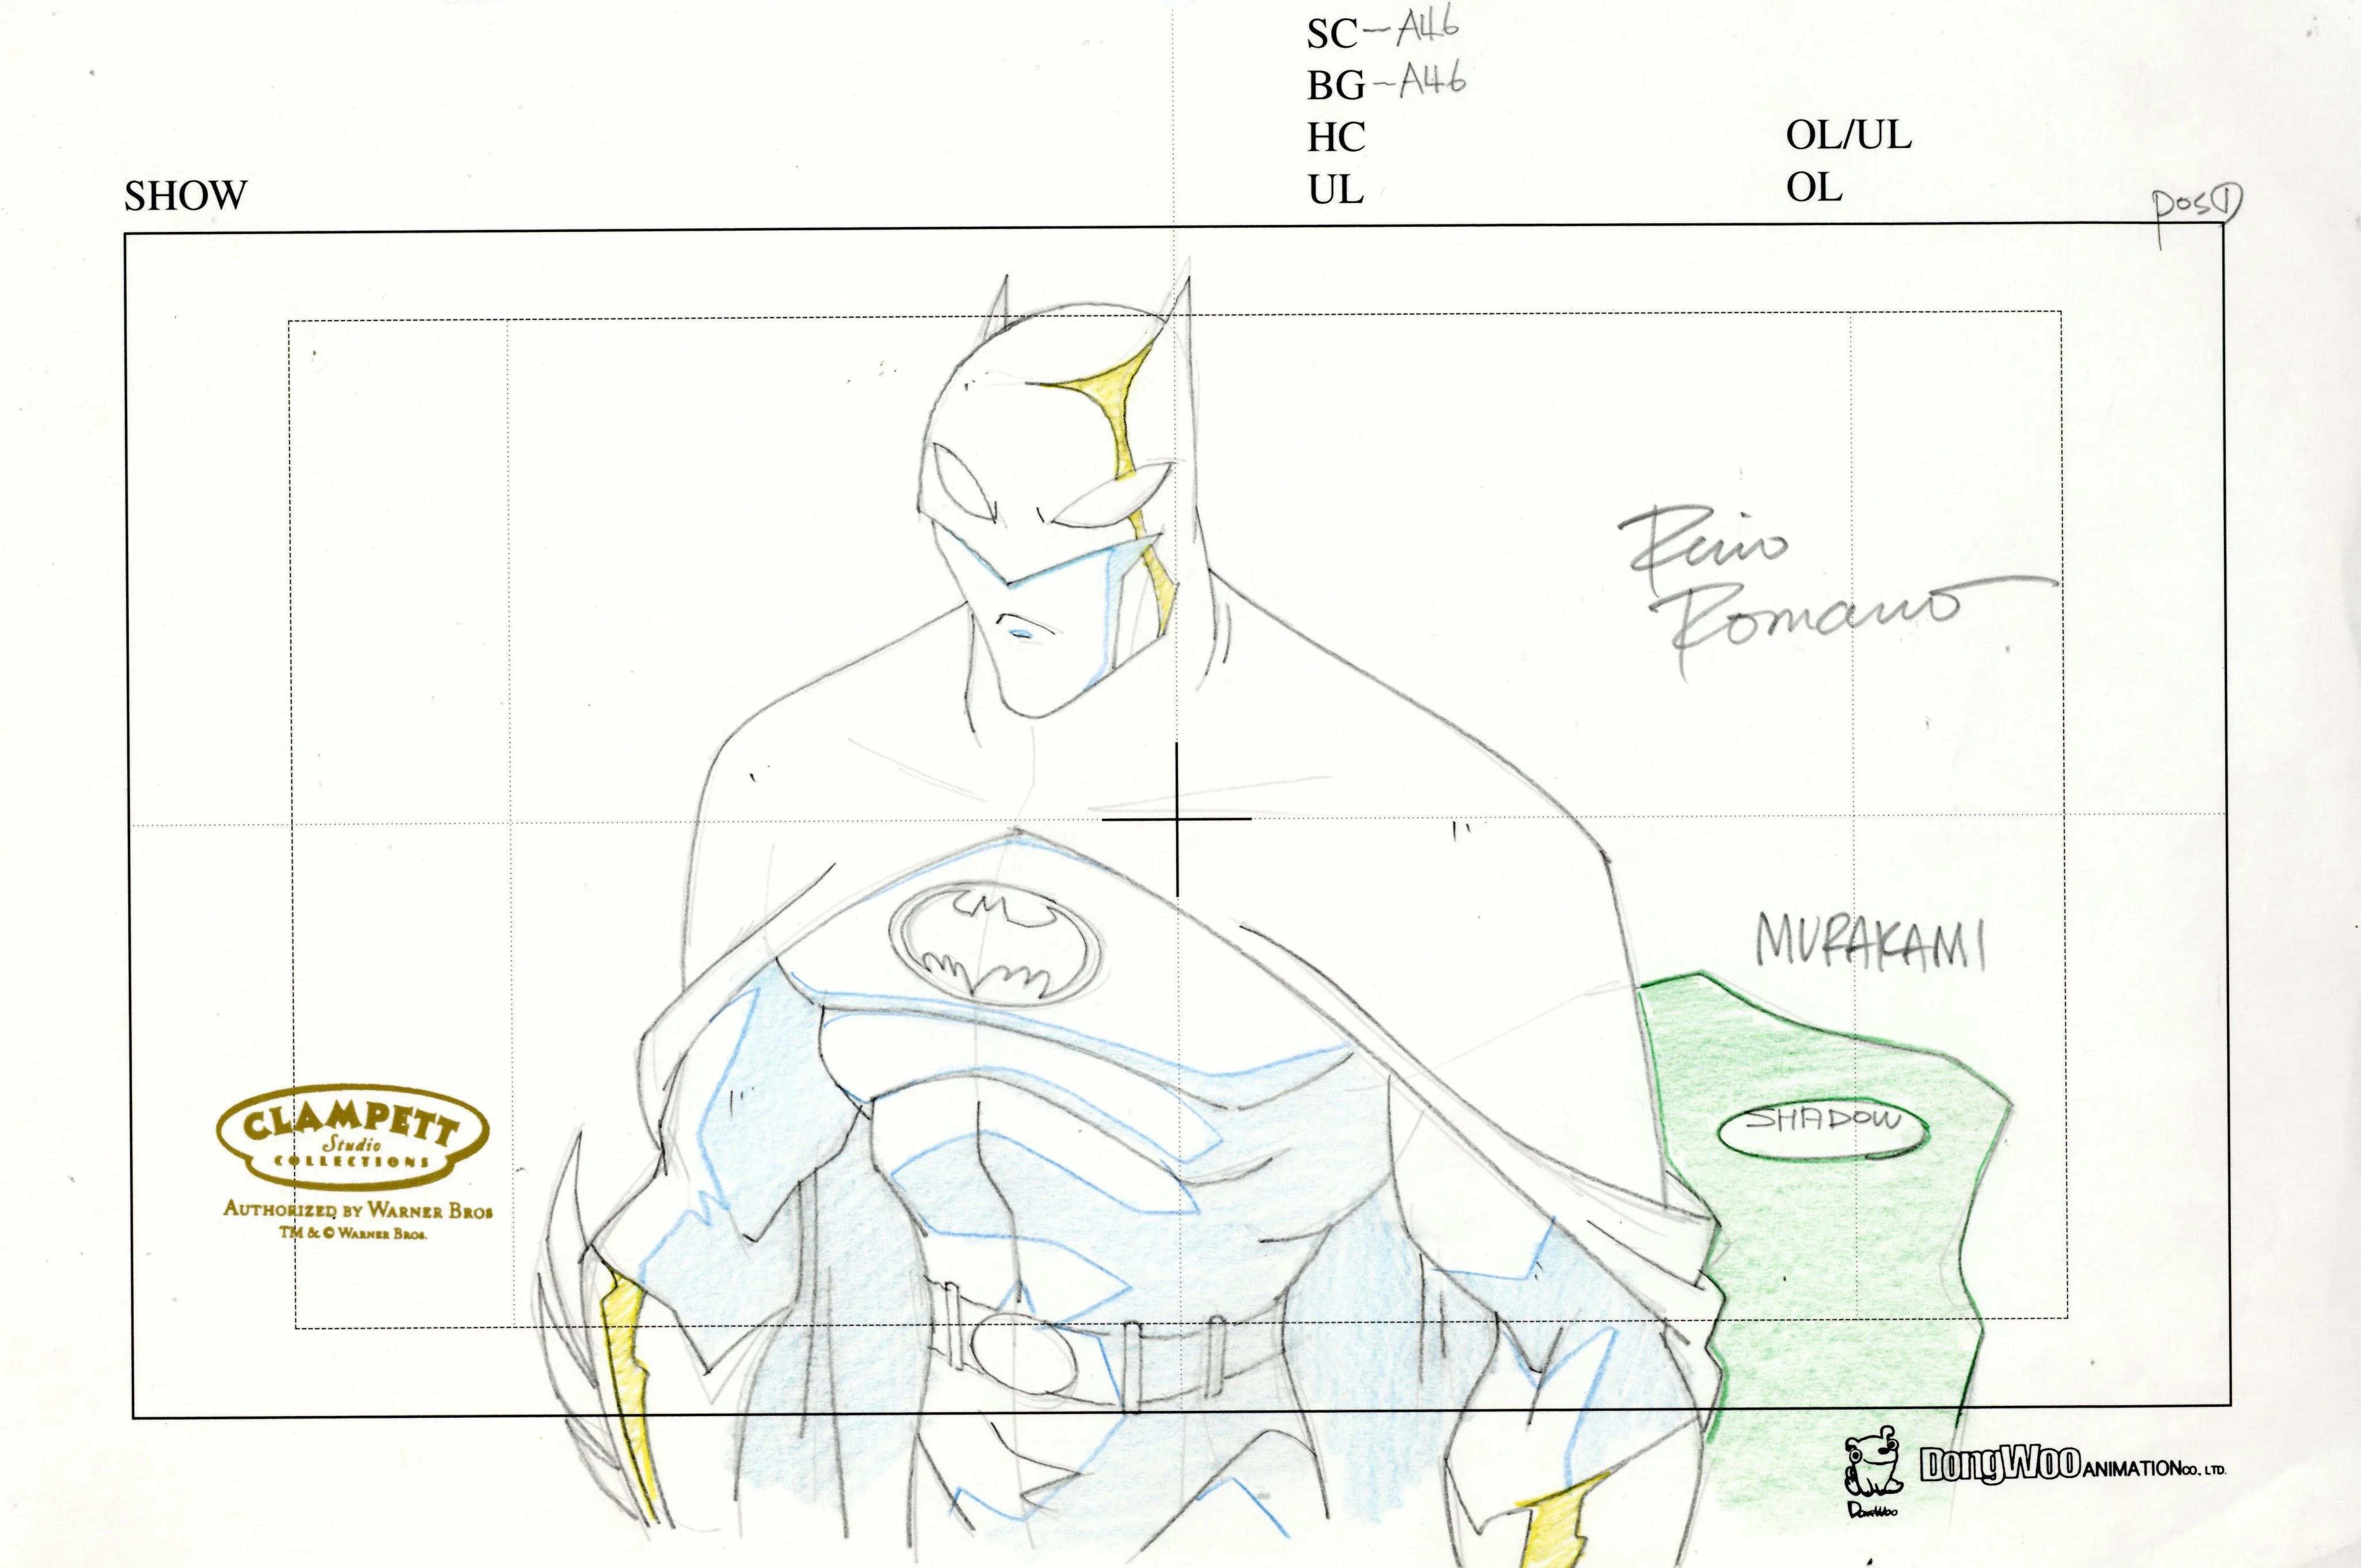 The Batman Original Production Drawing: Batman signed Rino Romano, Glen Murakami - Art by DC Comics Studio Artists